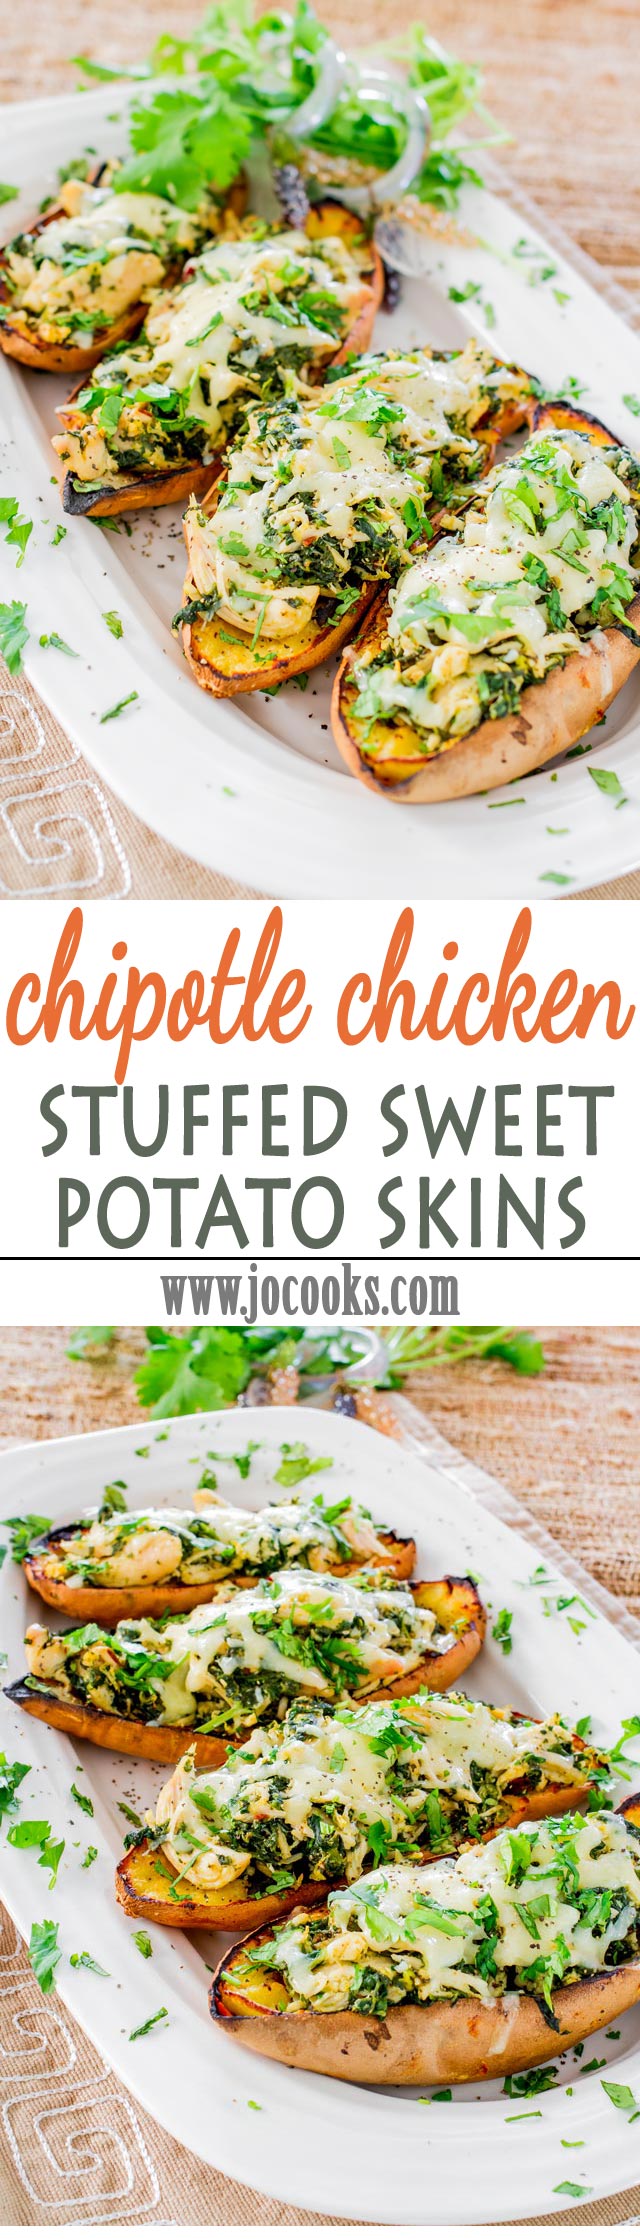 chipotle chicken stuffed sweet potato skins